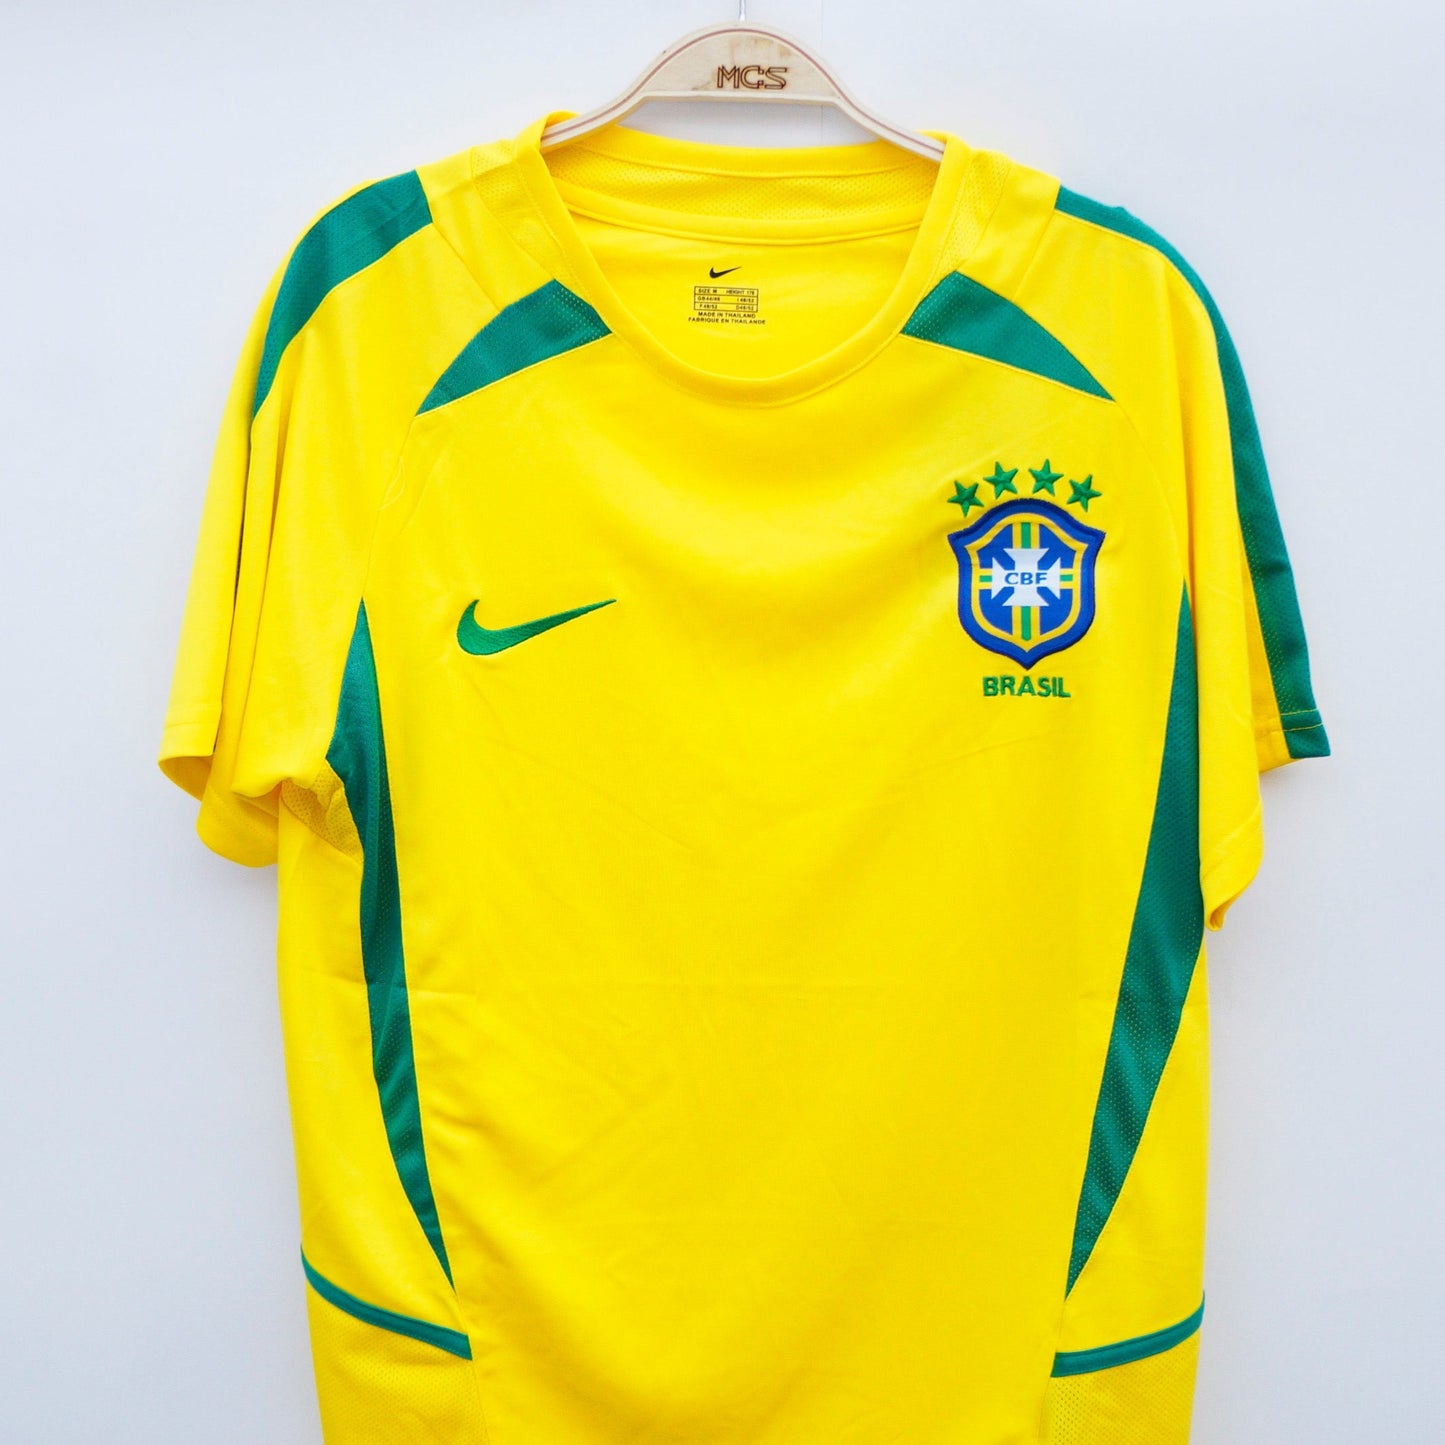 Brazil 2002 jersey